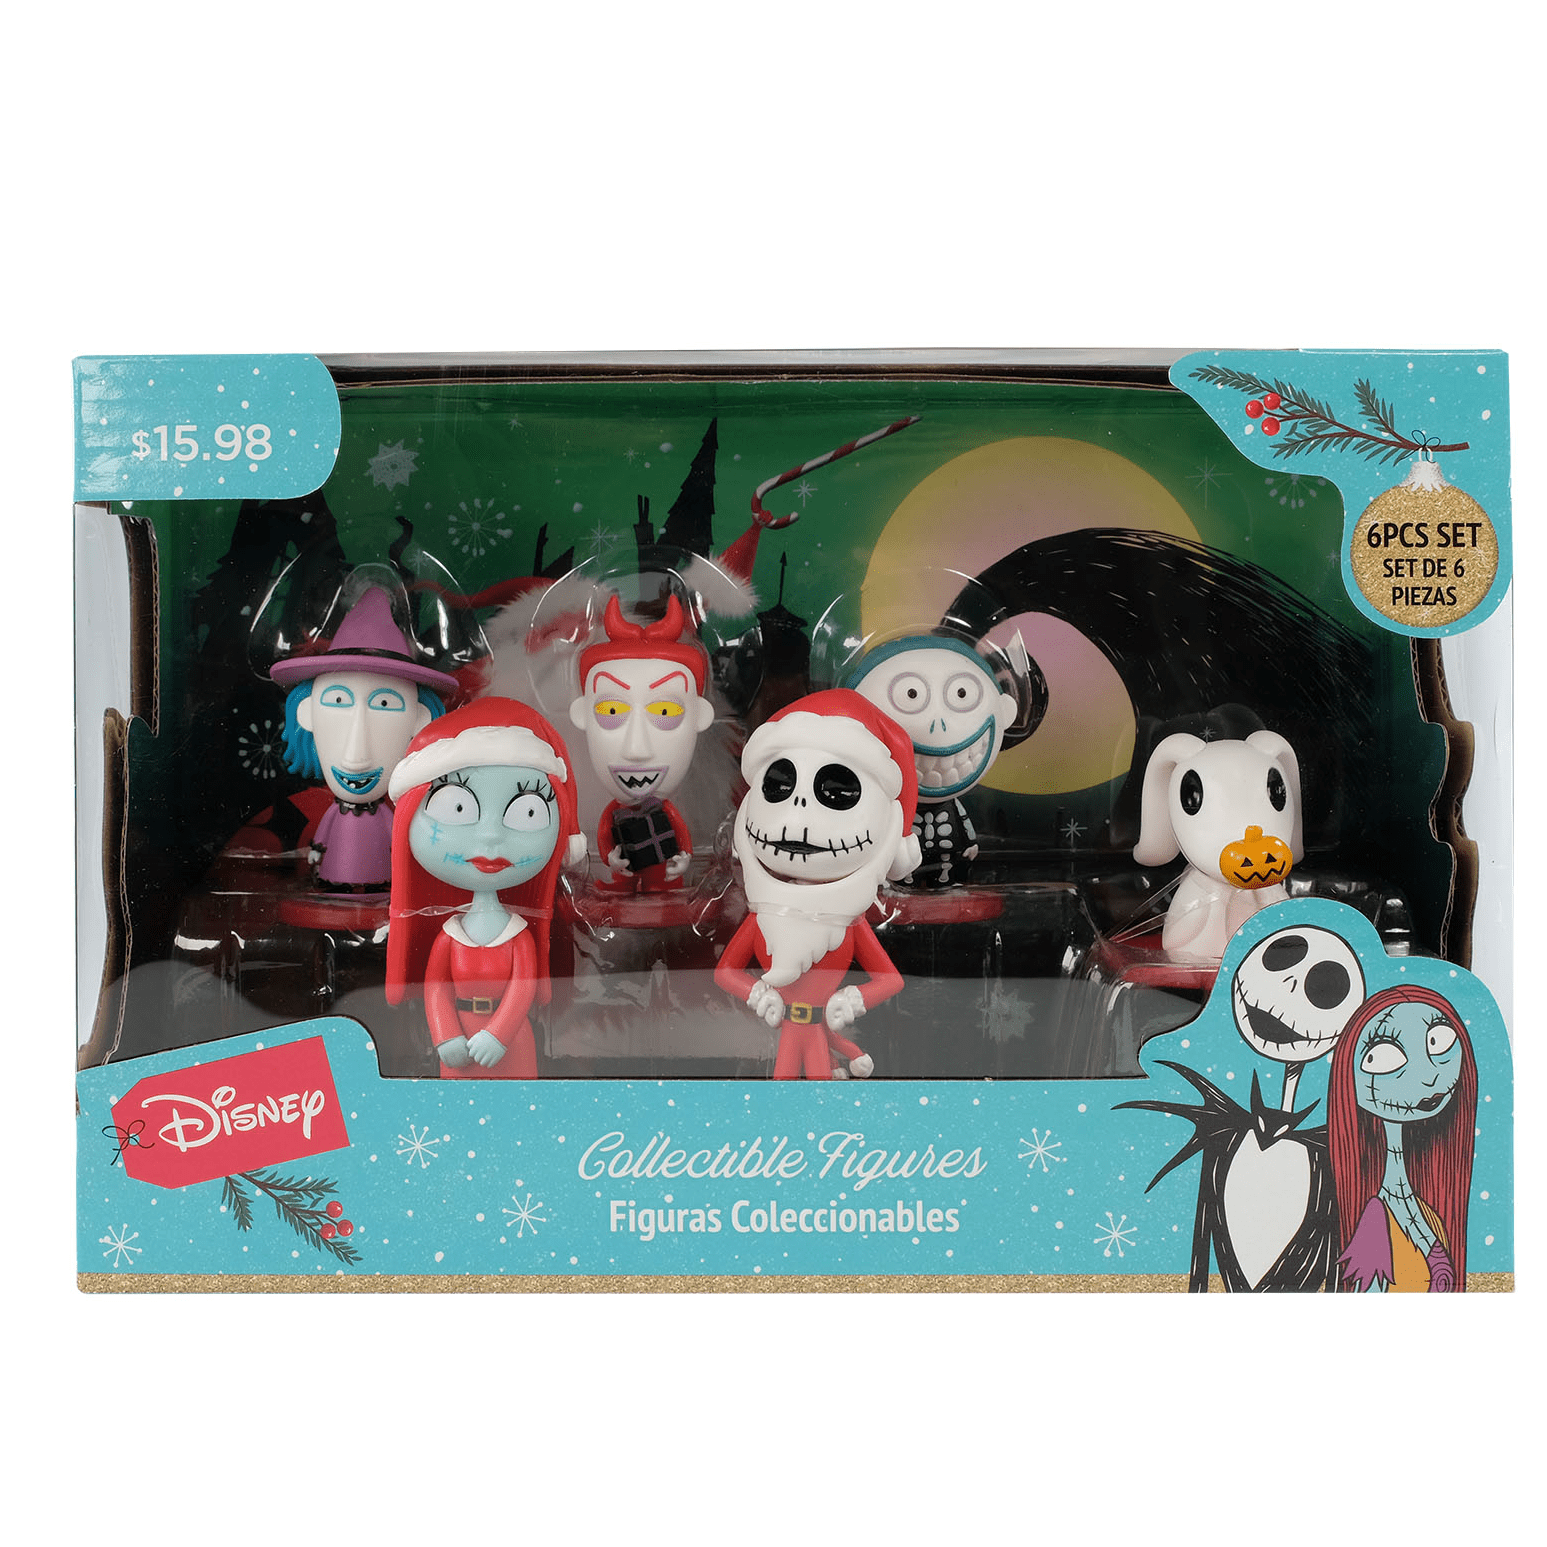 Disney, The Nightmare Before Christmas Halloweentown 6 piece Figurine Gift Set, Vinyl, Multi-Color